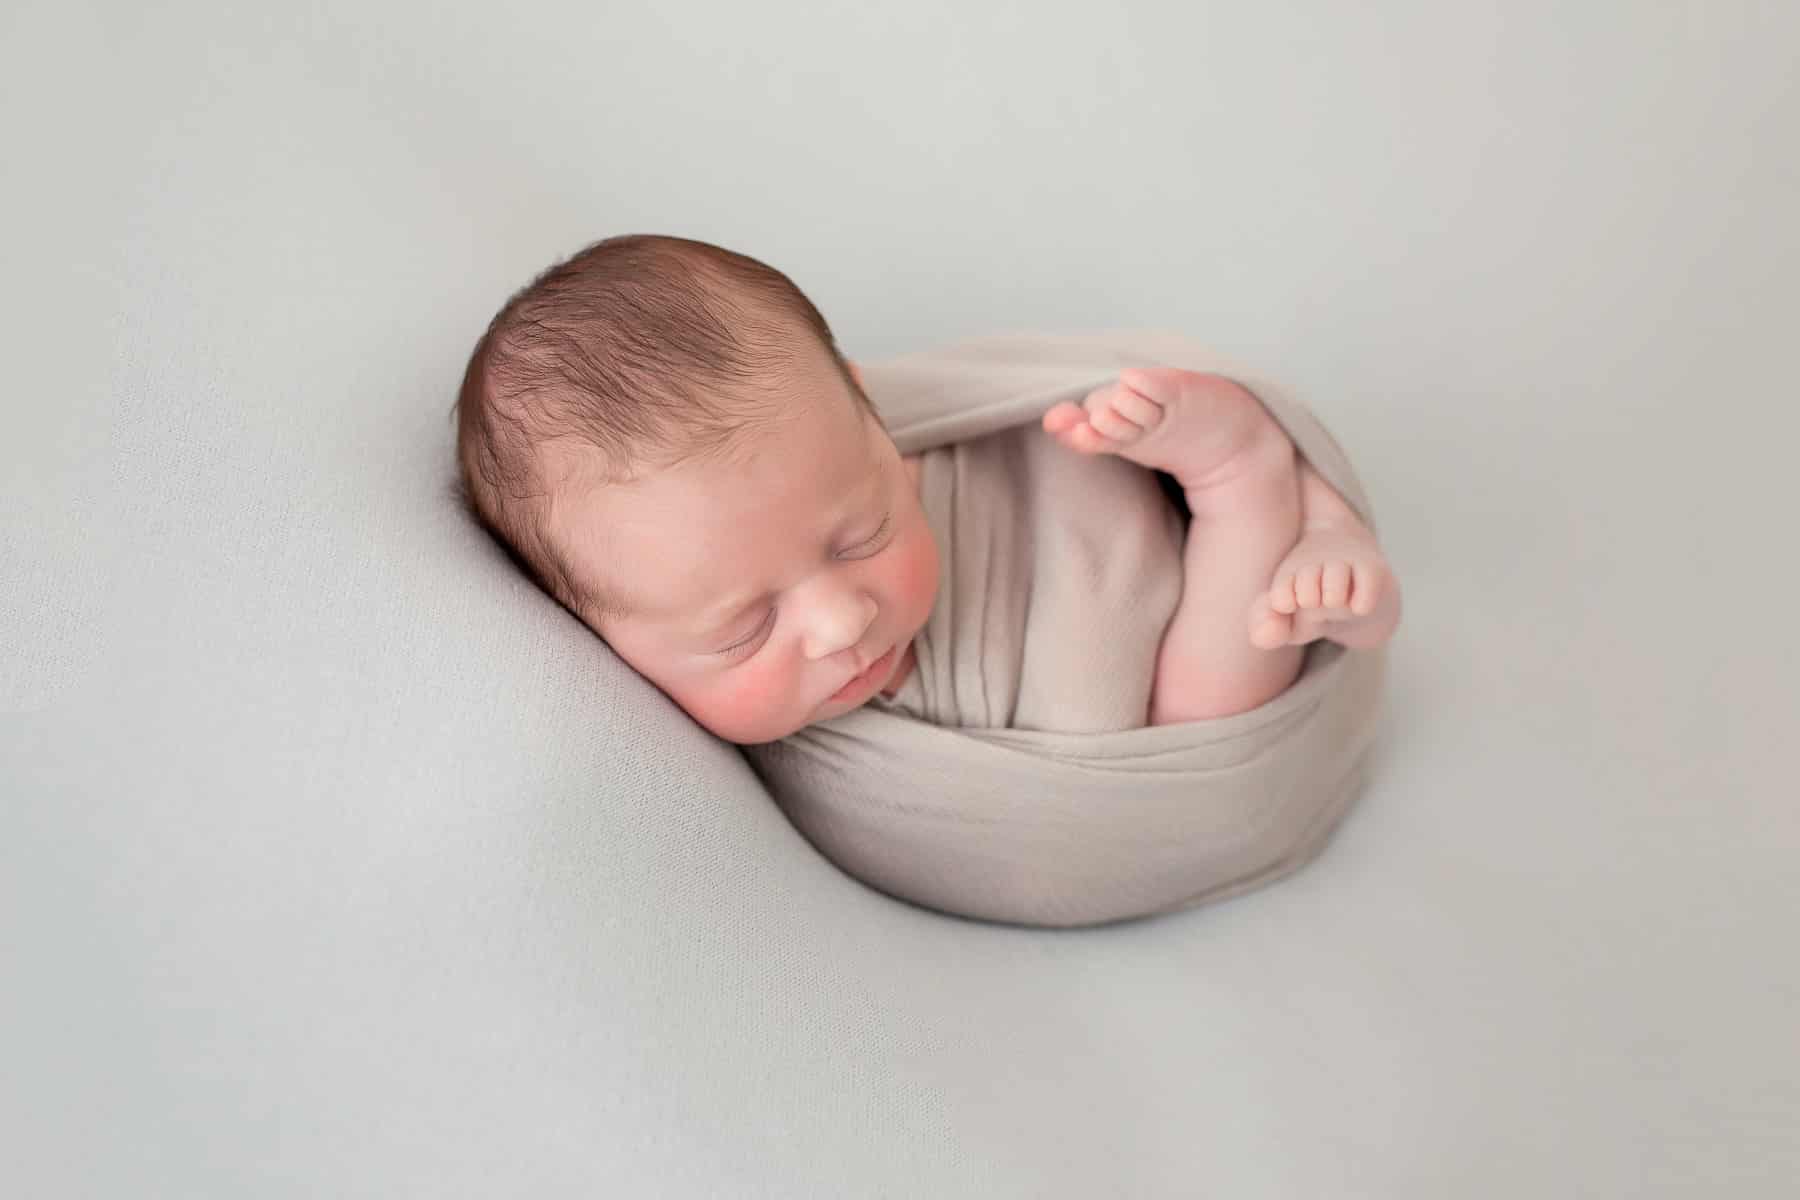 KRISTINA RECHE Petit Monde WORKSHOP FOTOGRAFOA NEWBORN 16 - Newborn